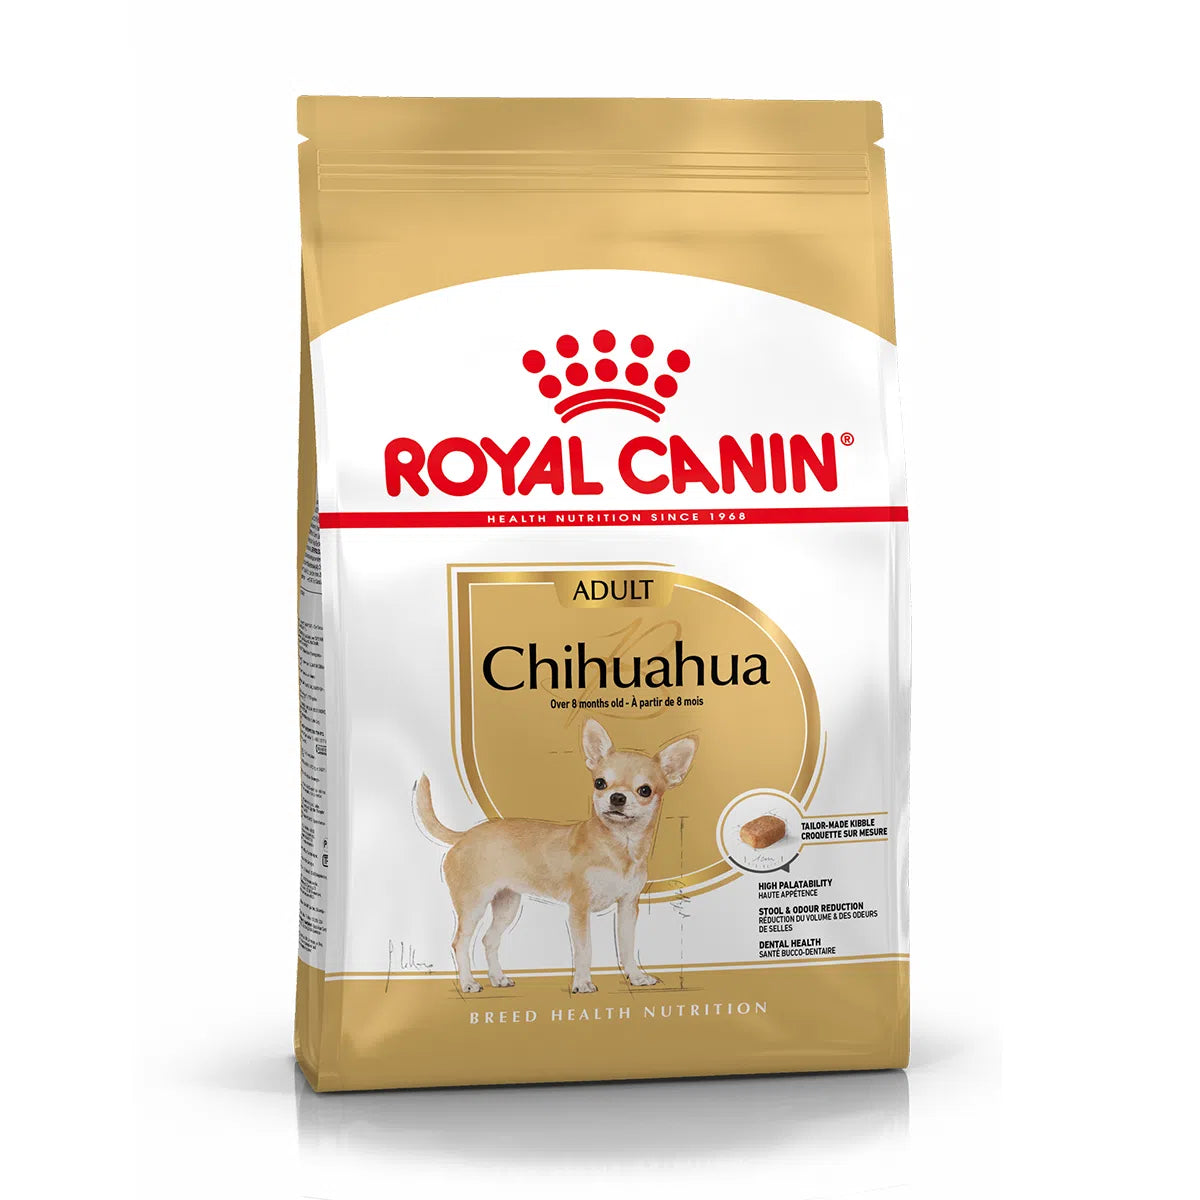 Royal Canin - Crocchette per Chihuahua adulto - 500gr